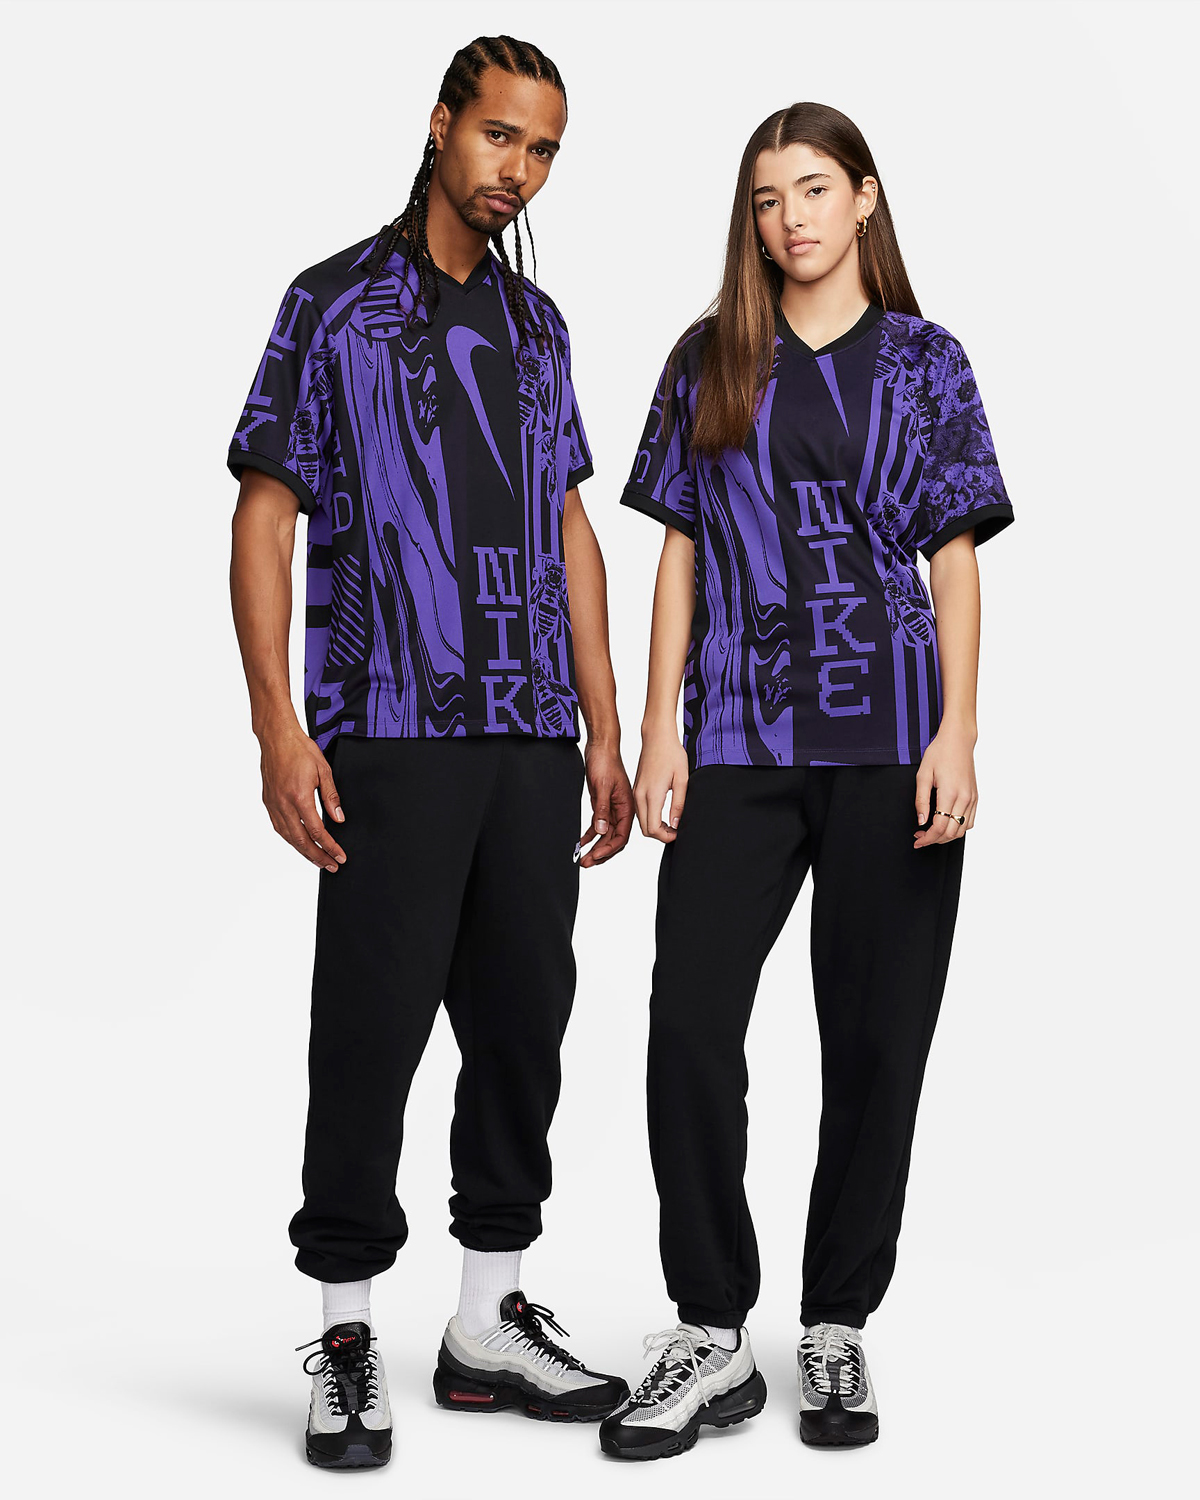 Nike Voltage Purple Shirt